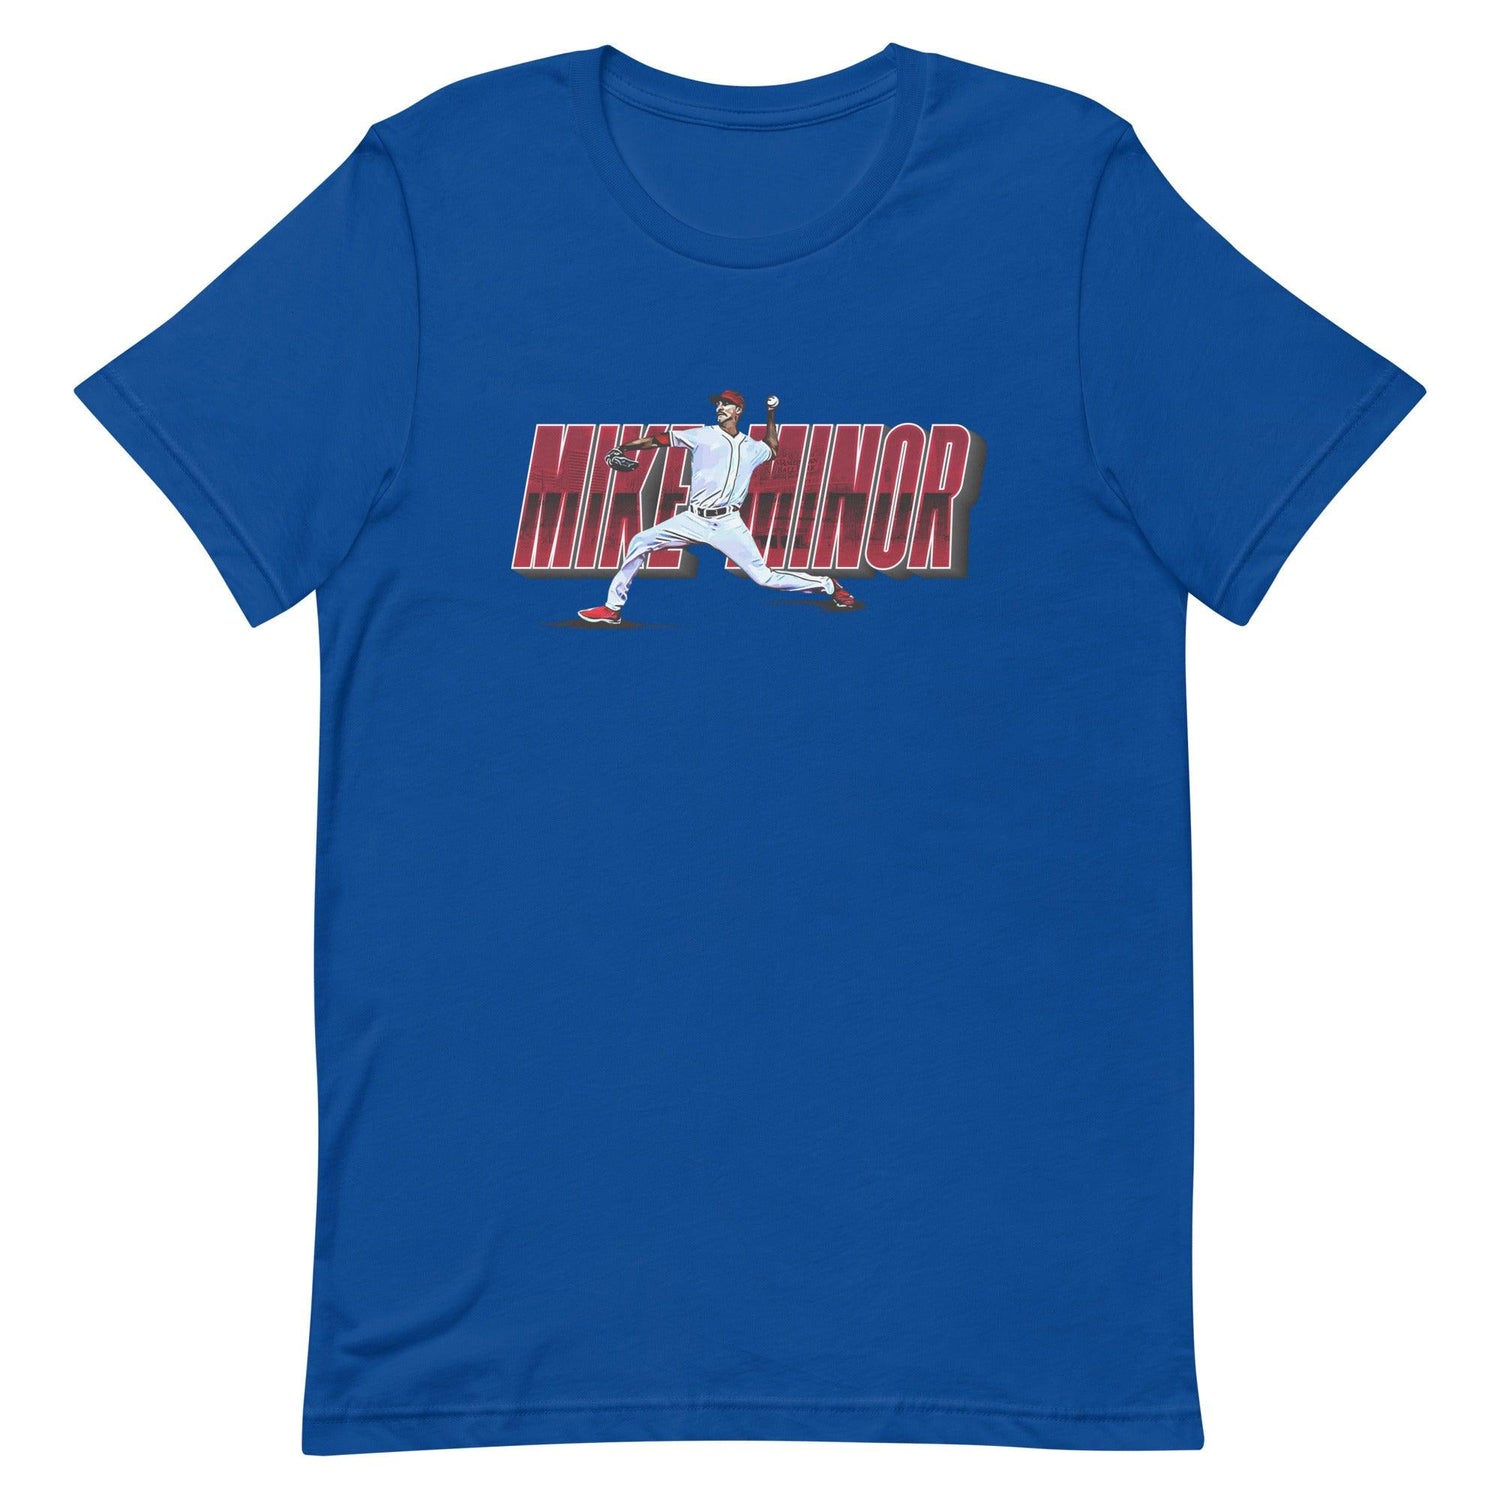 Mike Minor "Wind Up" t-shirt - Fan Arch